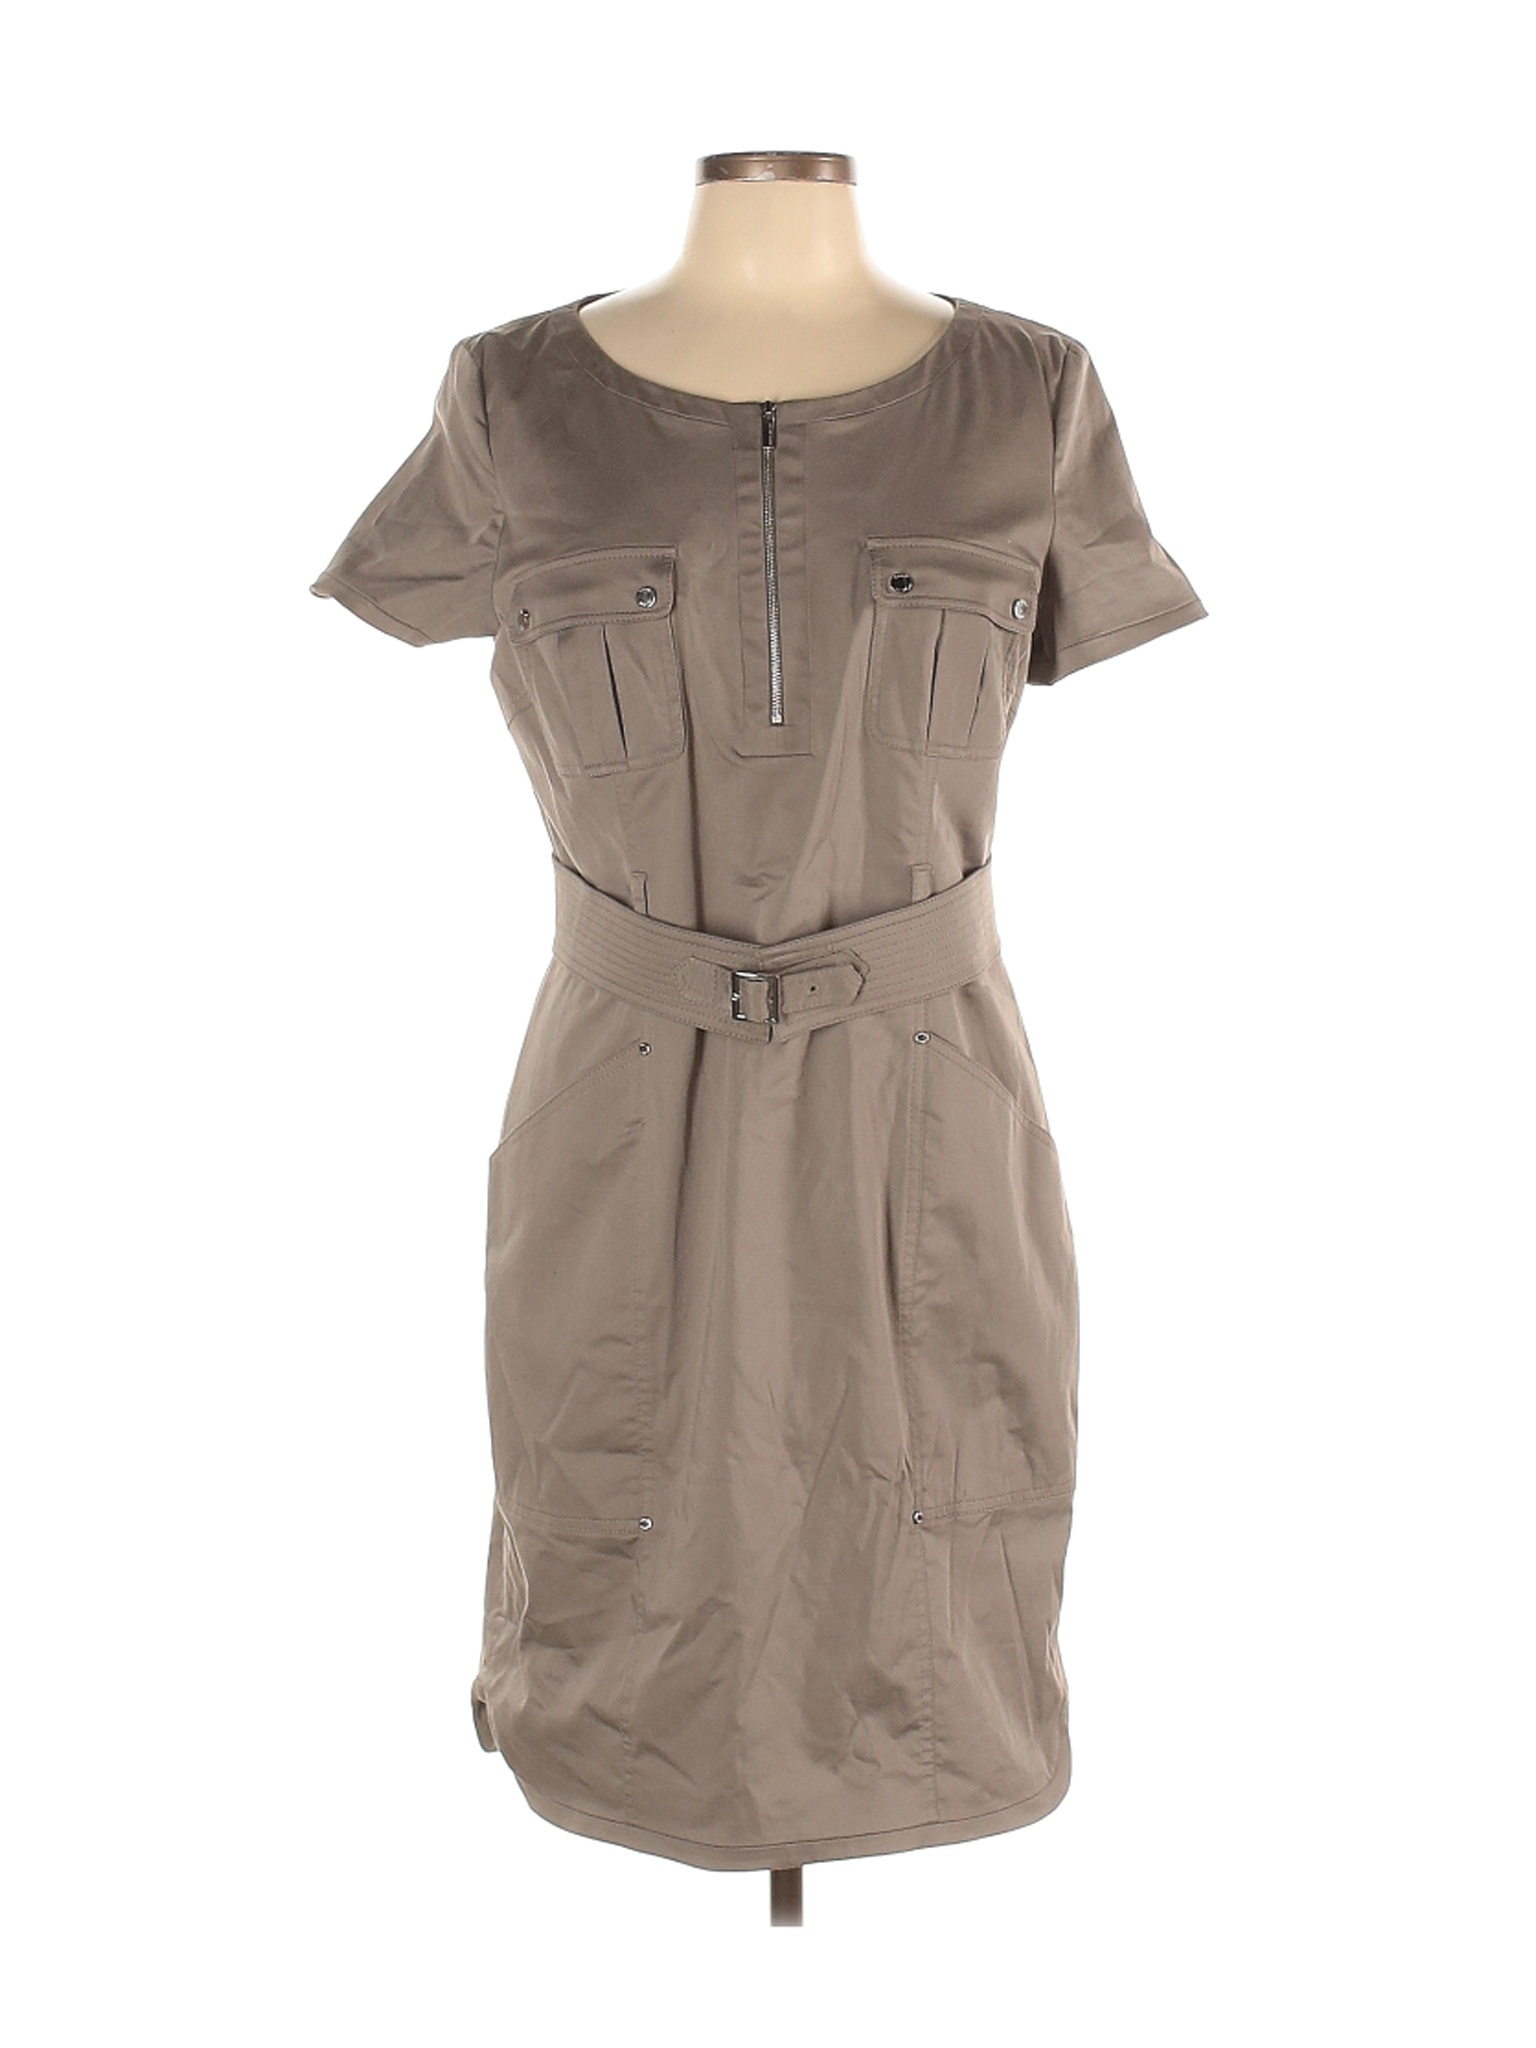 Karen Millen Women Gray Casual Dress 12 | eBay